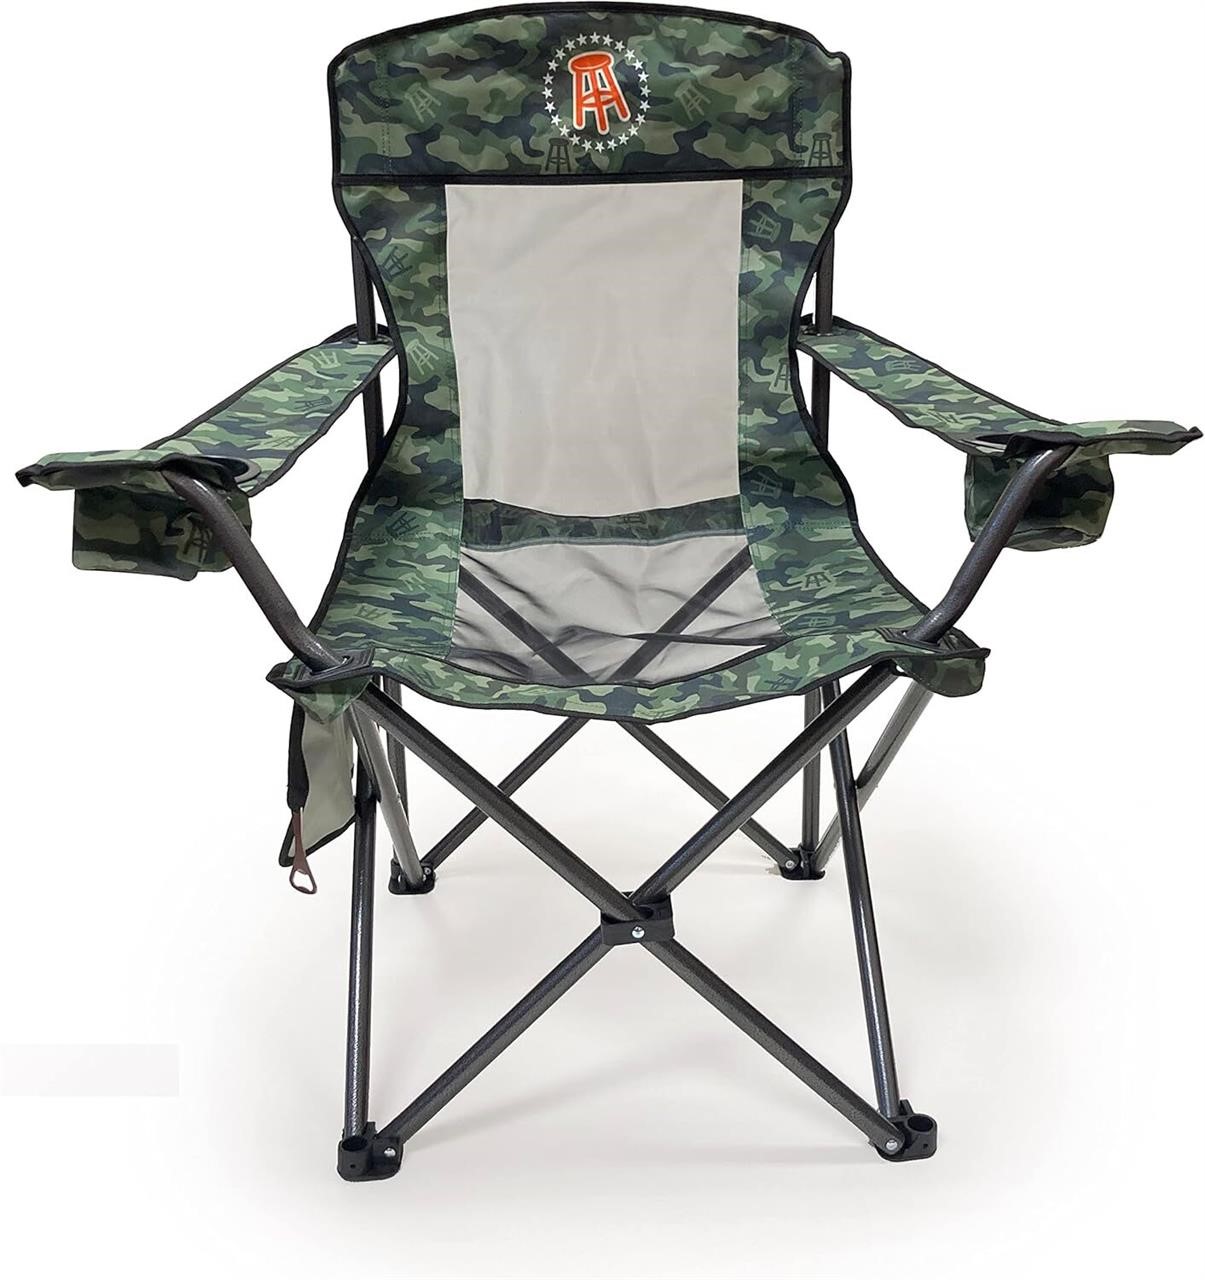 $45  Heavy Duty Big Boy Mesh Camping Chair  Camo